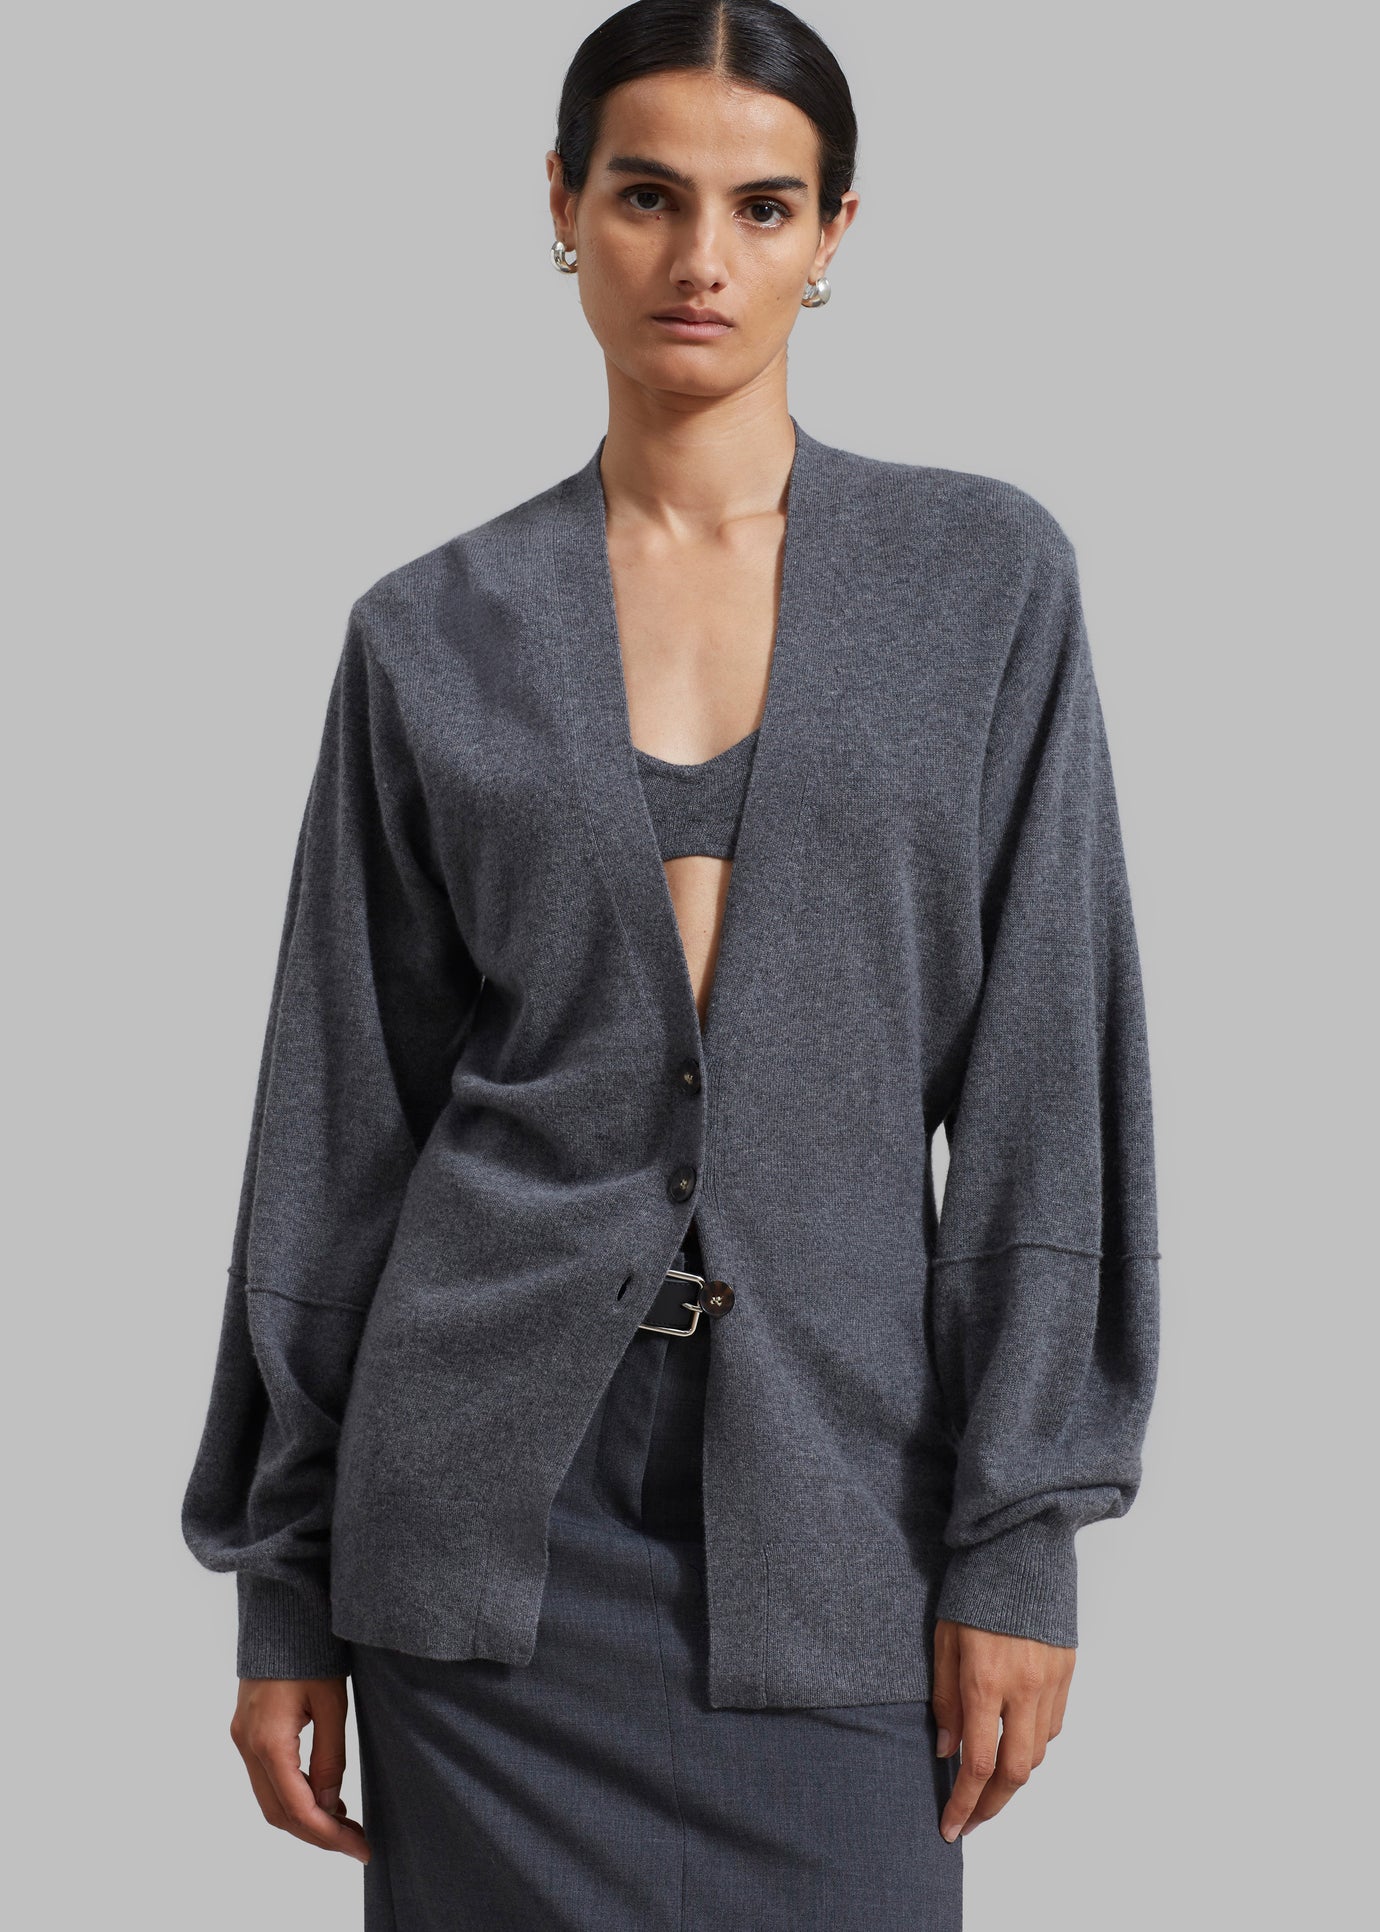 The Garment Como Sleeve Cardigan - Grey Melange - 1